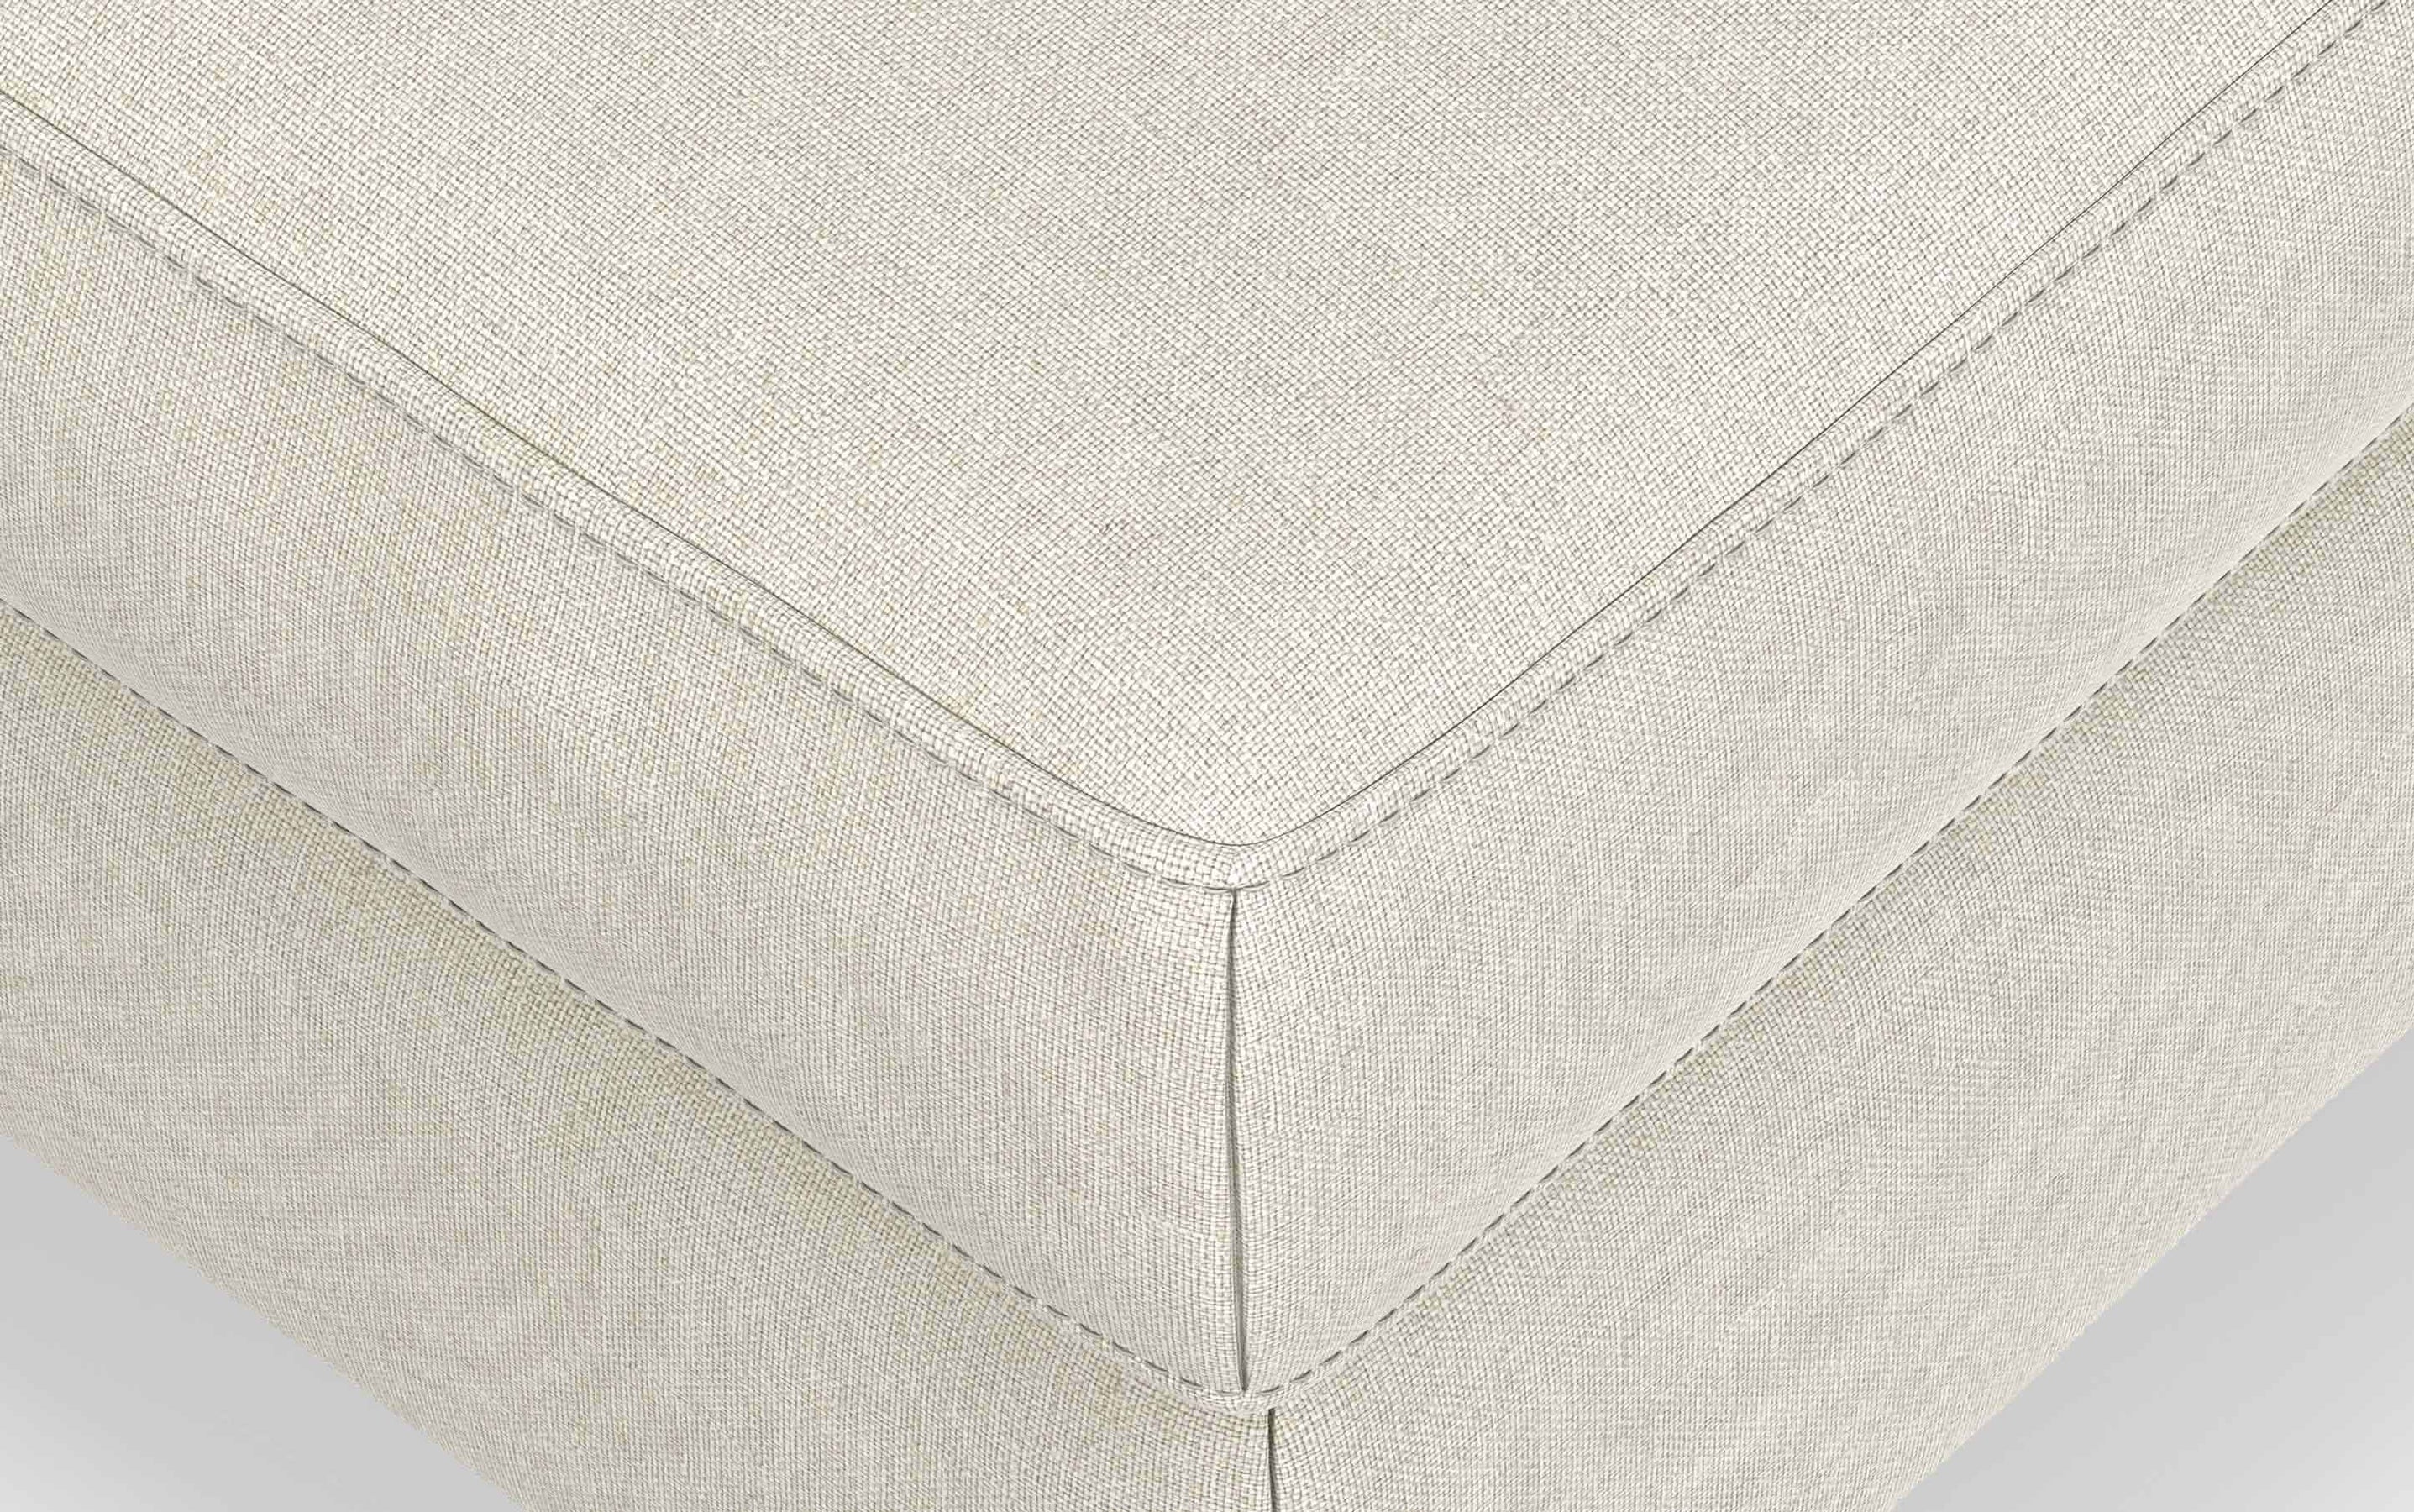 Cream Performance Fabric | Ava 76 inch Mid Century Sofa with Ottoman Set